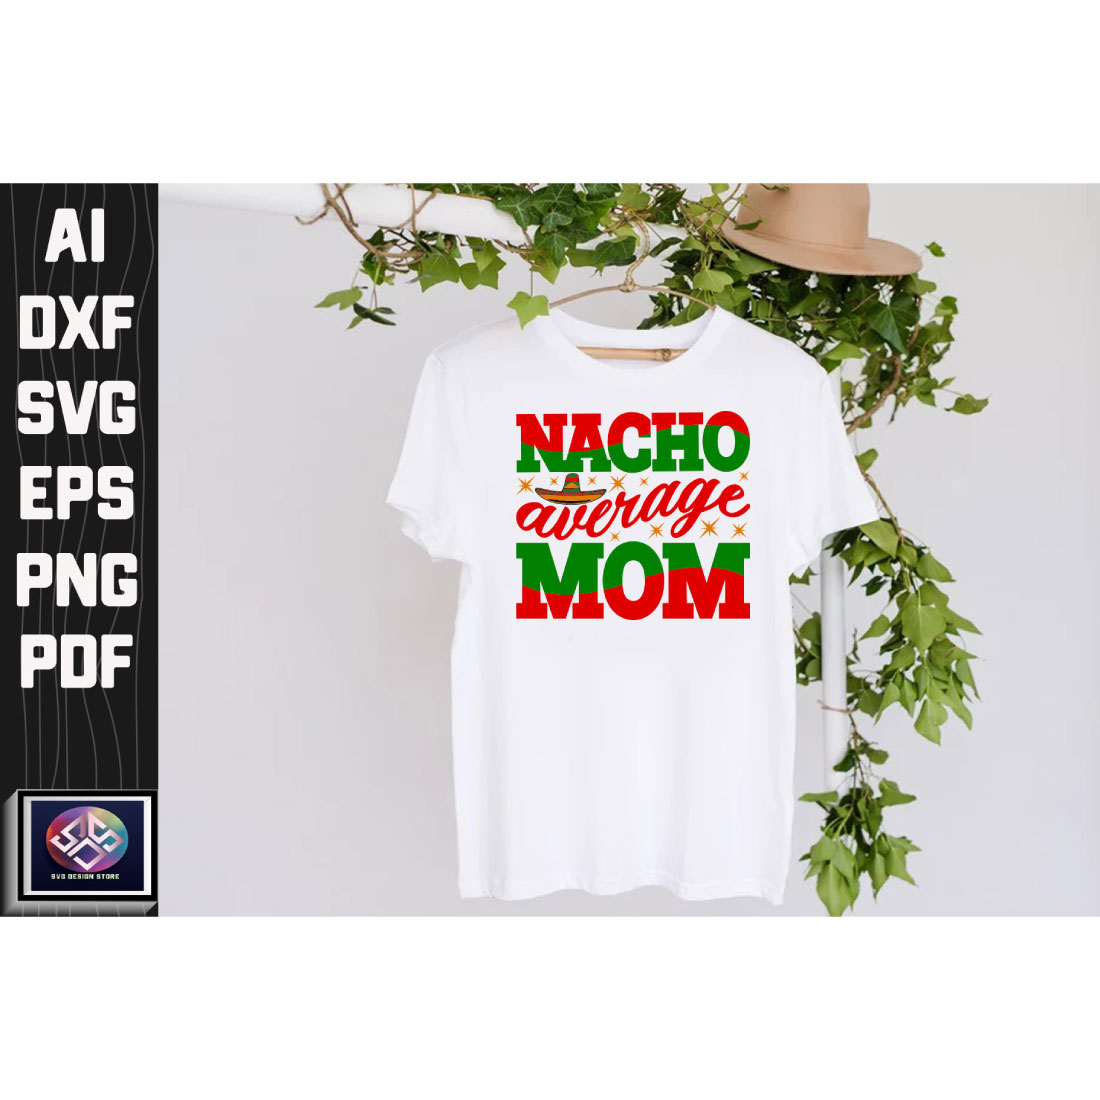 Nacho Average Mom preview image.